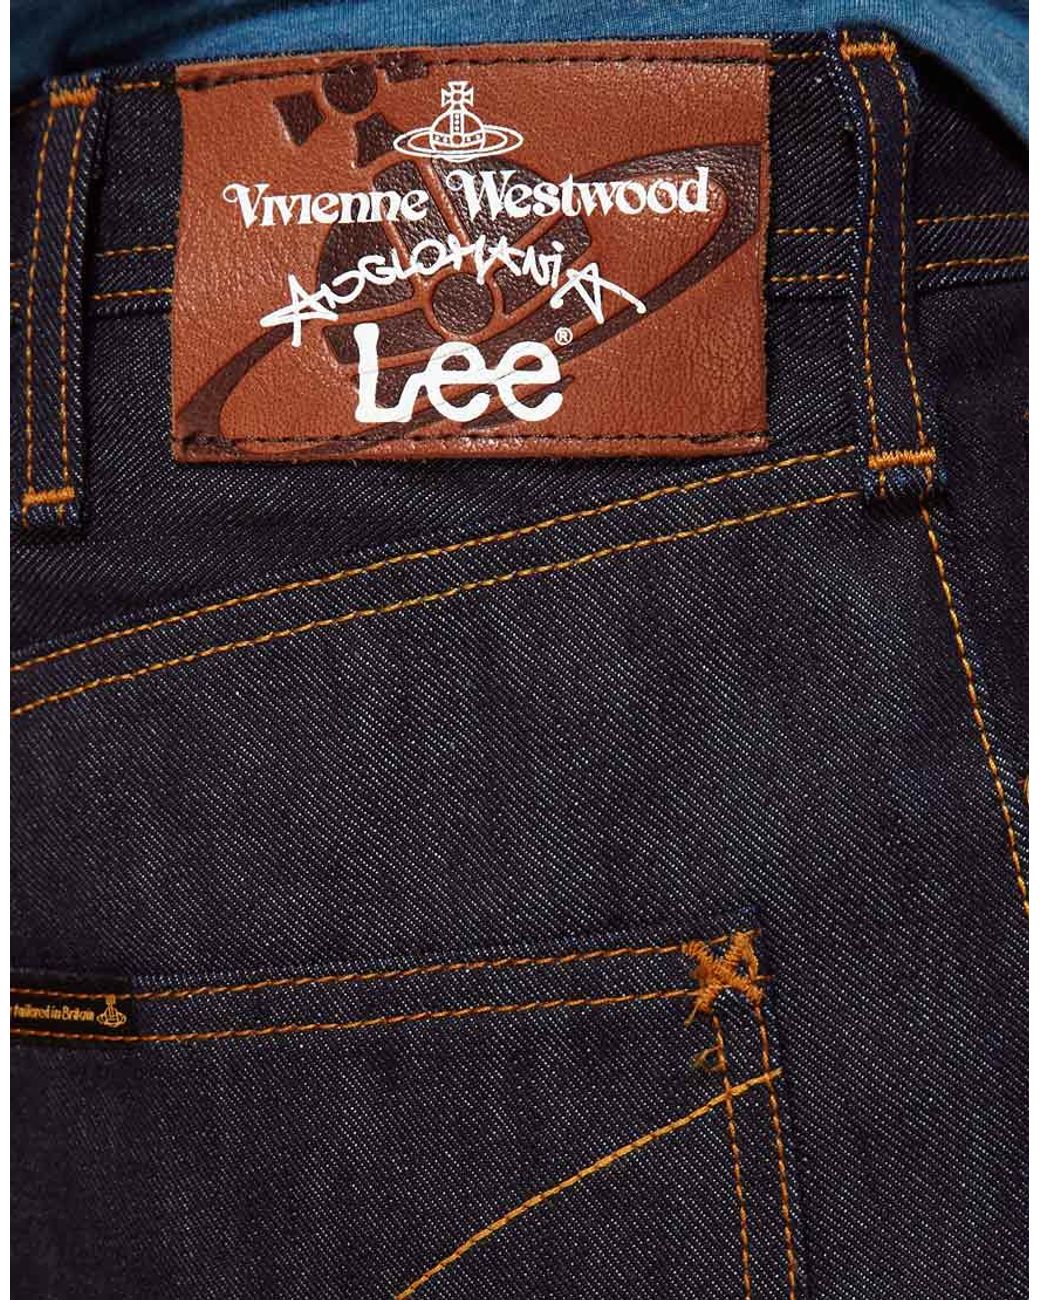 Vivienne Westwood x Lee コラボデニム